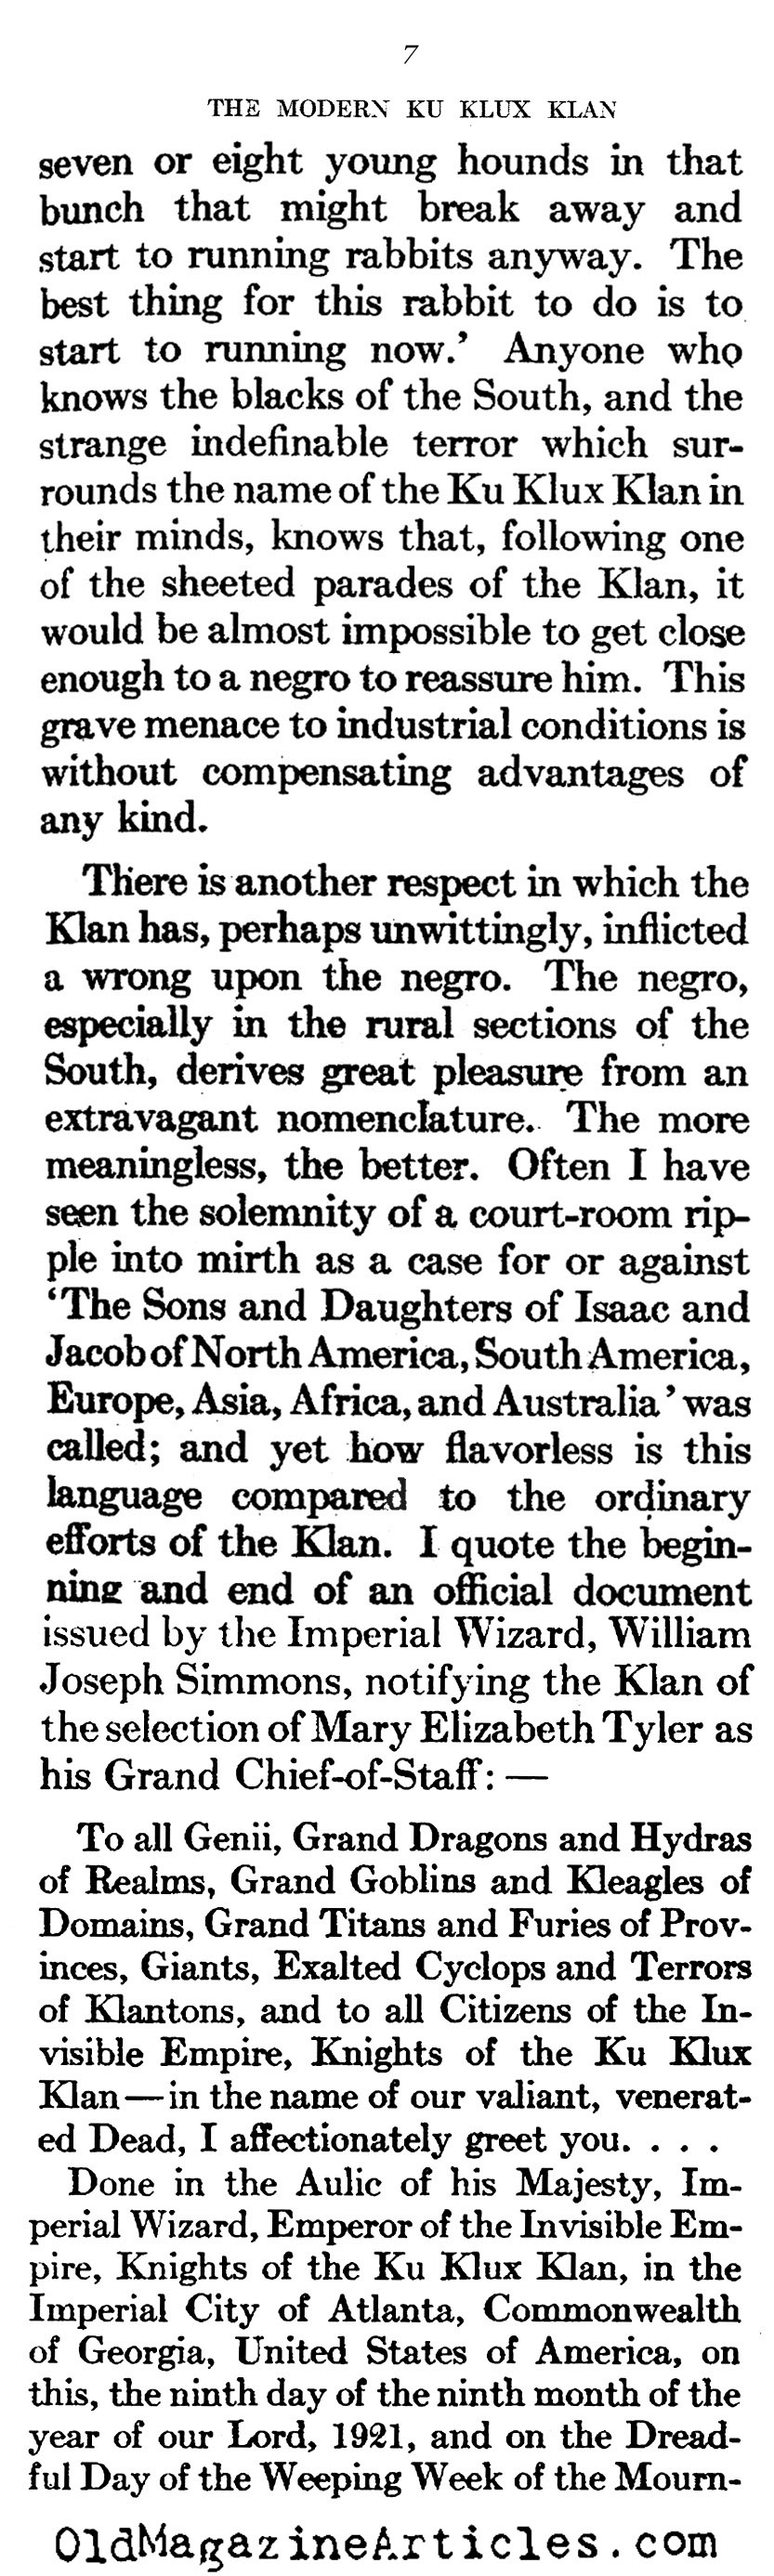 The Modern Klan (Atlantic Monthly, 1922)